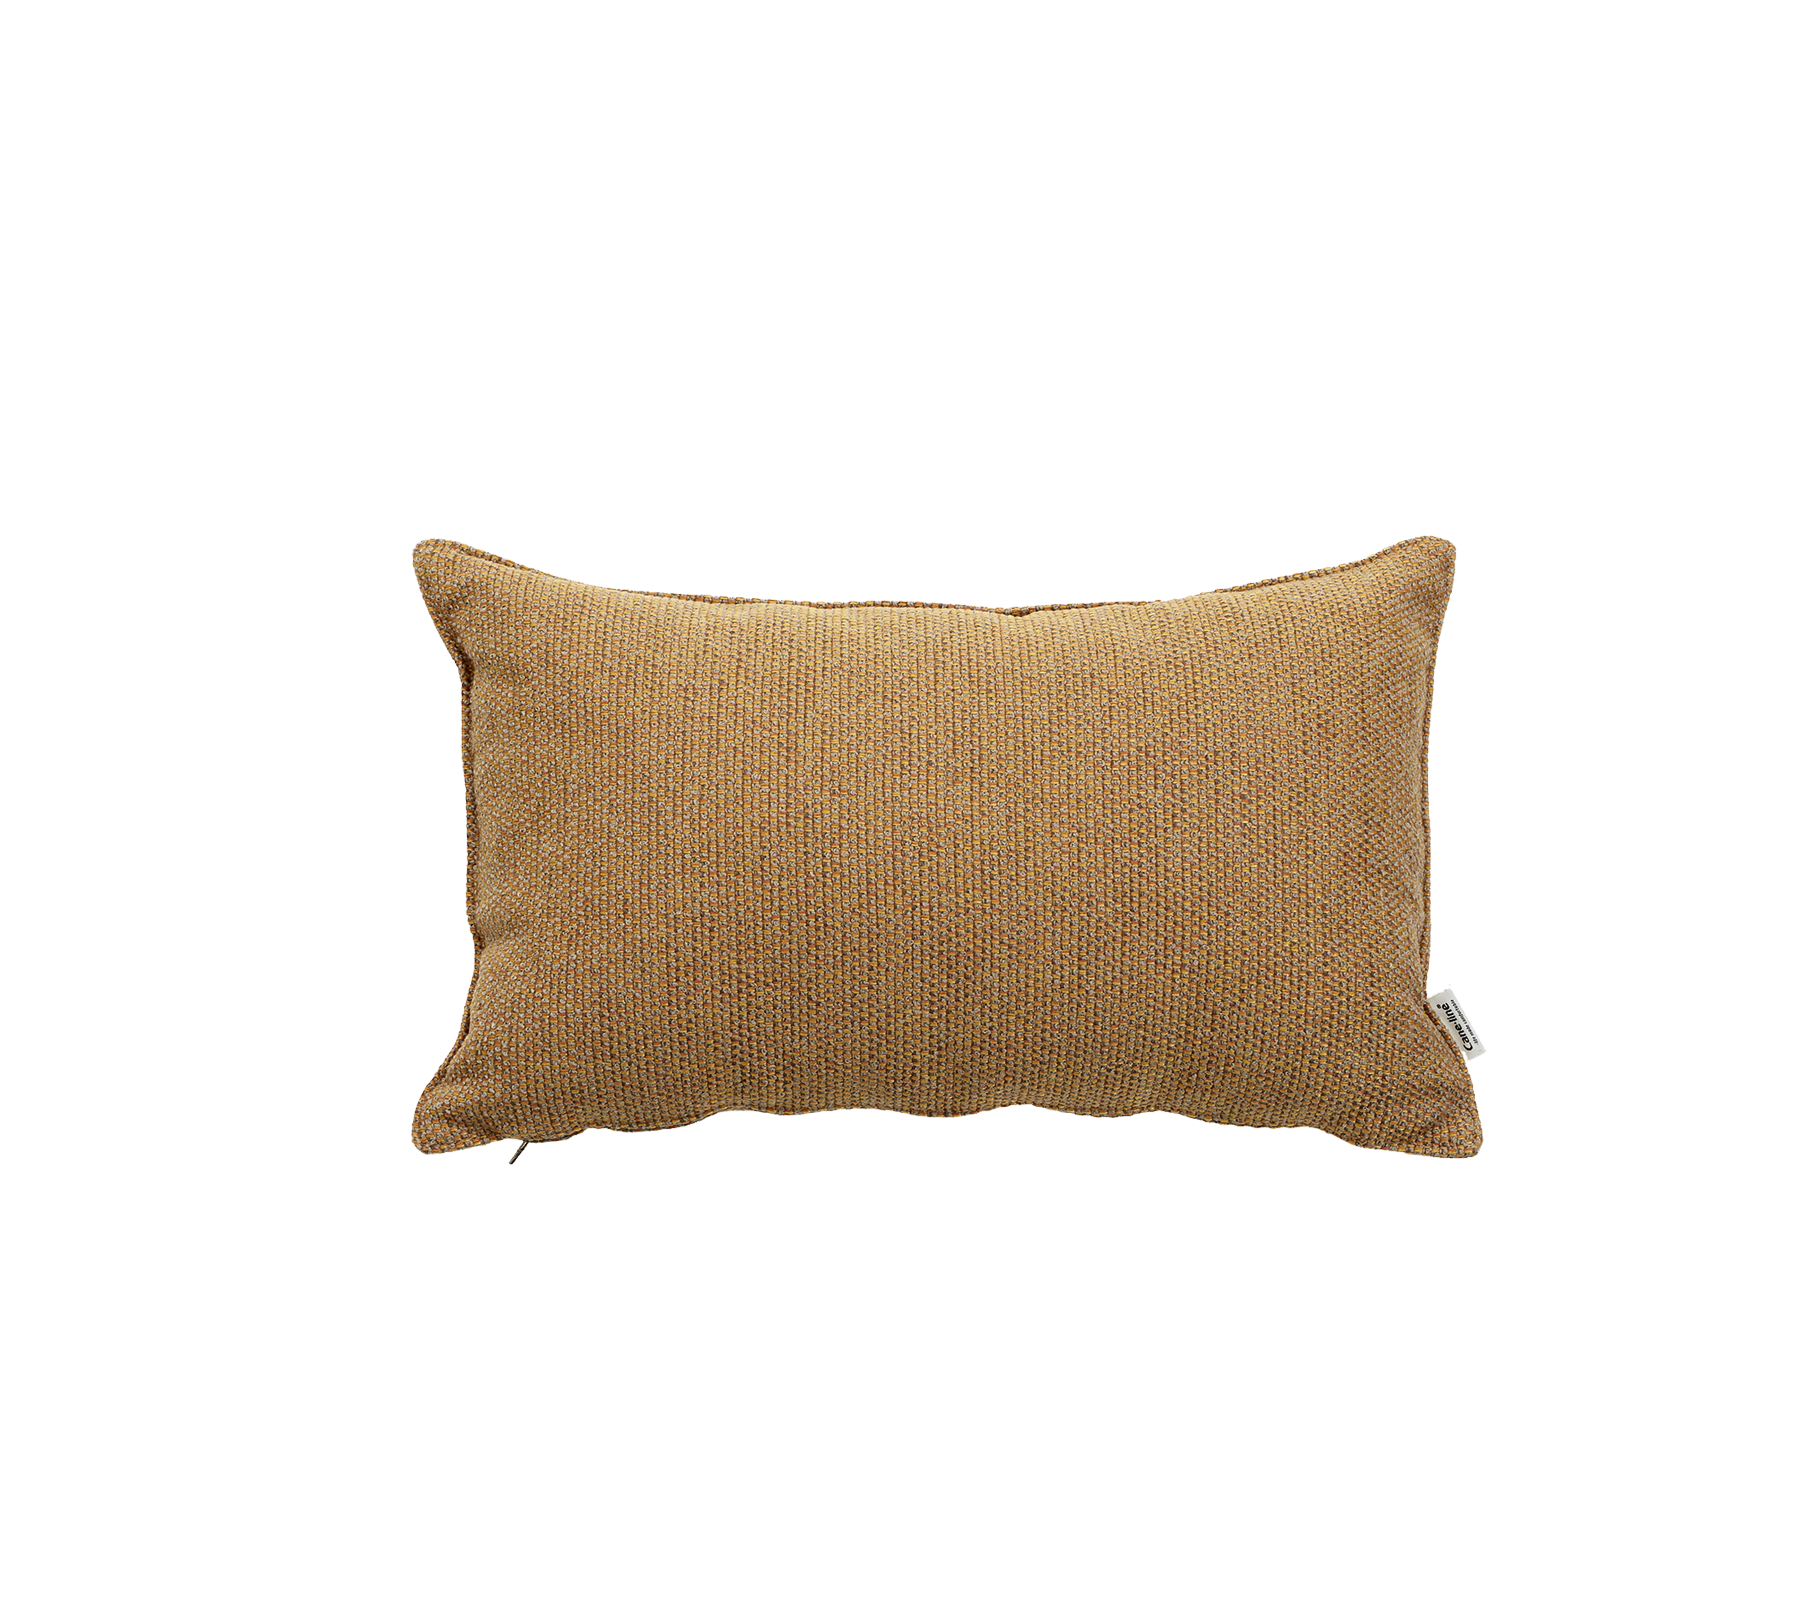 Wove scatter cushion, 32x52x12 cm